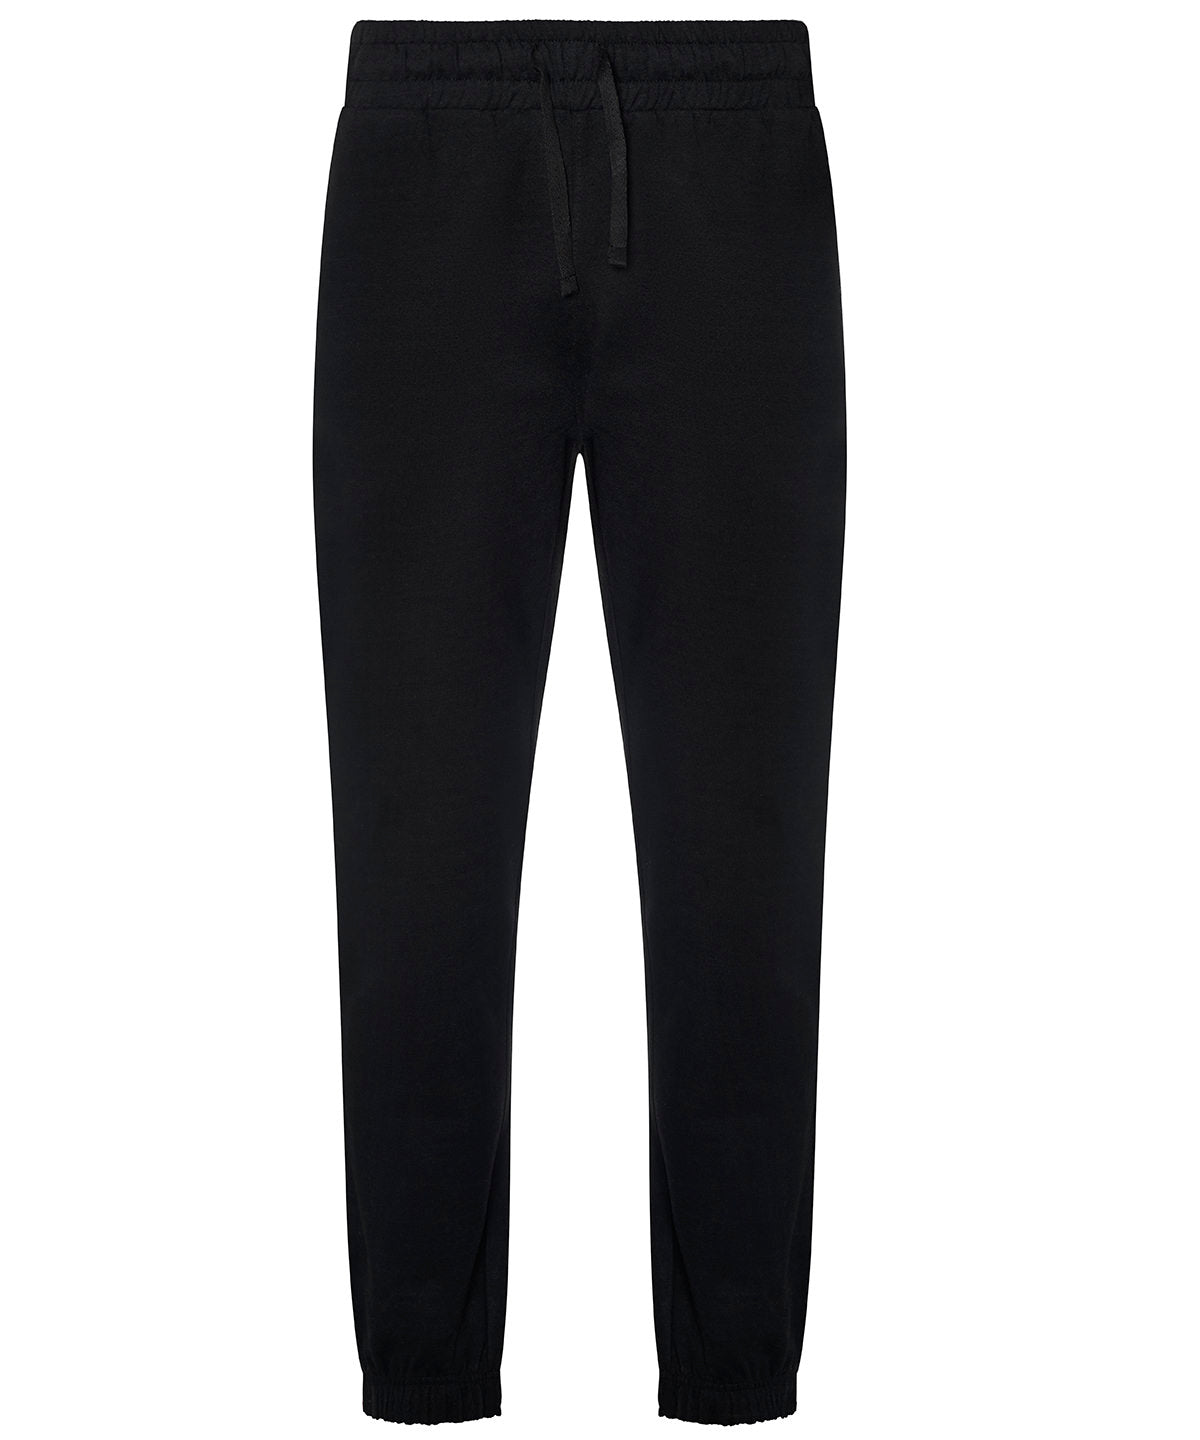 Personalised Sweatpants - Black AWDis Ecologie Crater recycled jog pants